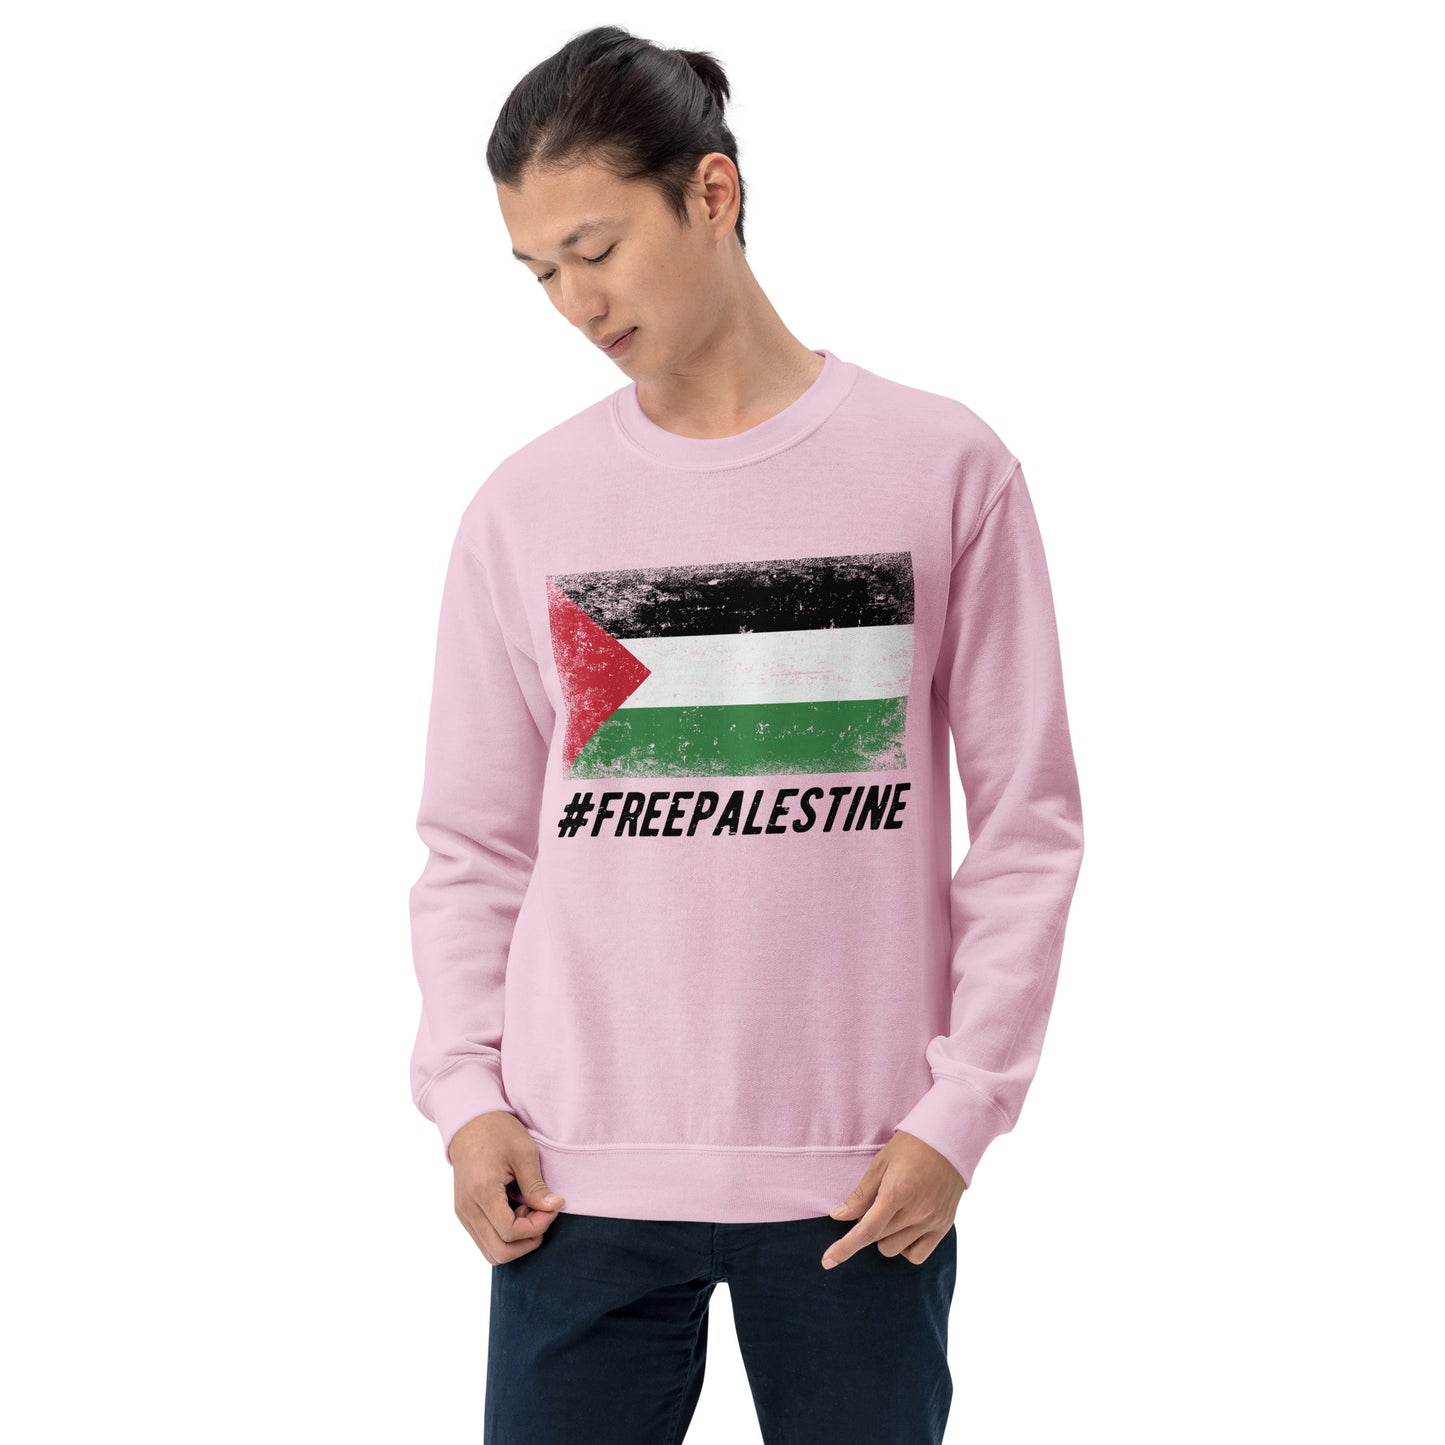 Light Pink Color Free Palestine Sweatshirt / Palestine Clothing Sizes XS - 5XL